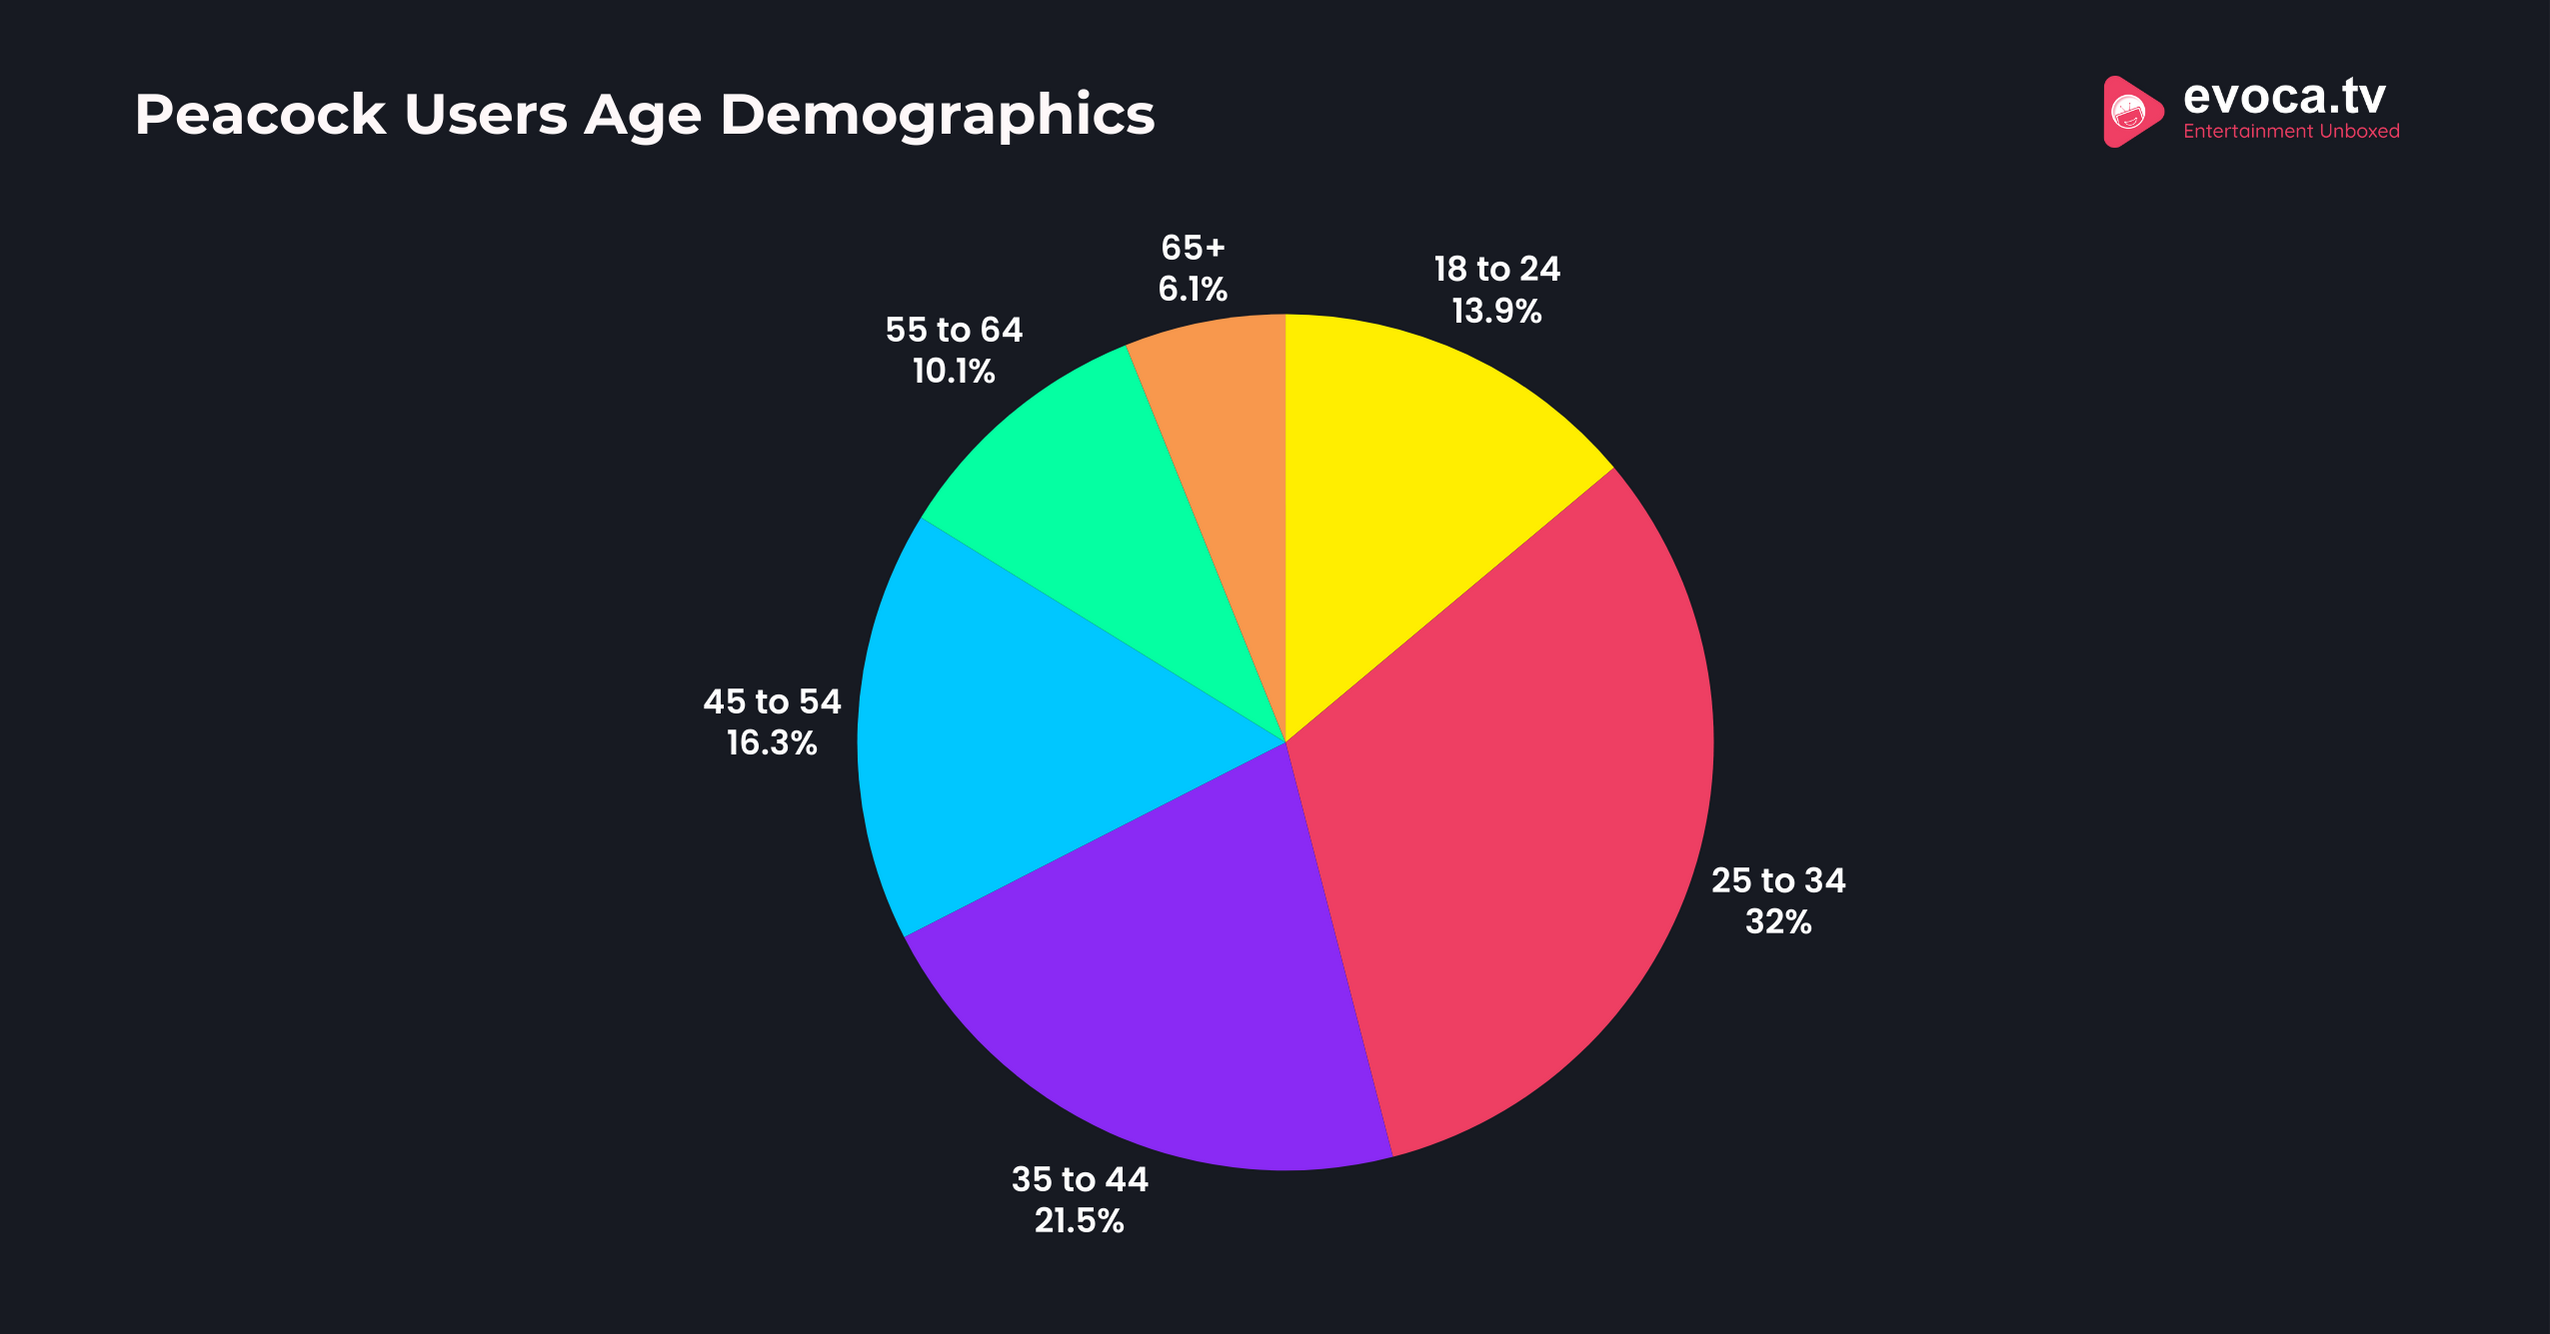 Peacock Users Age Demographics